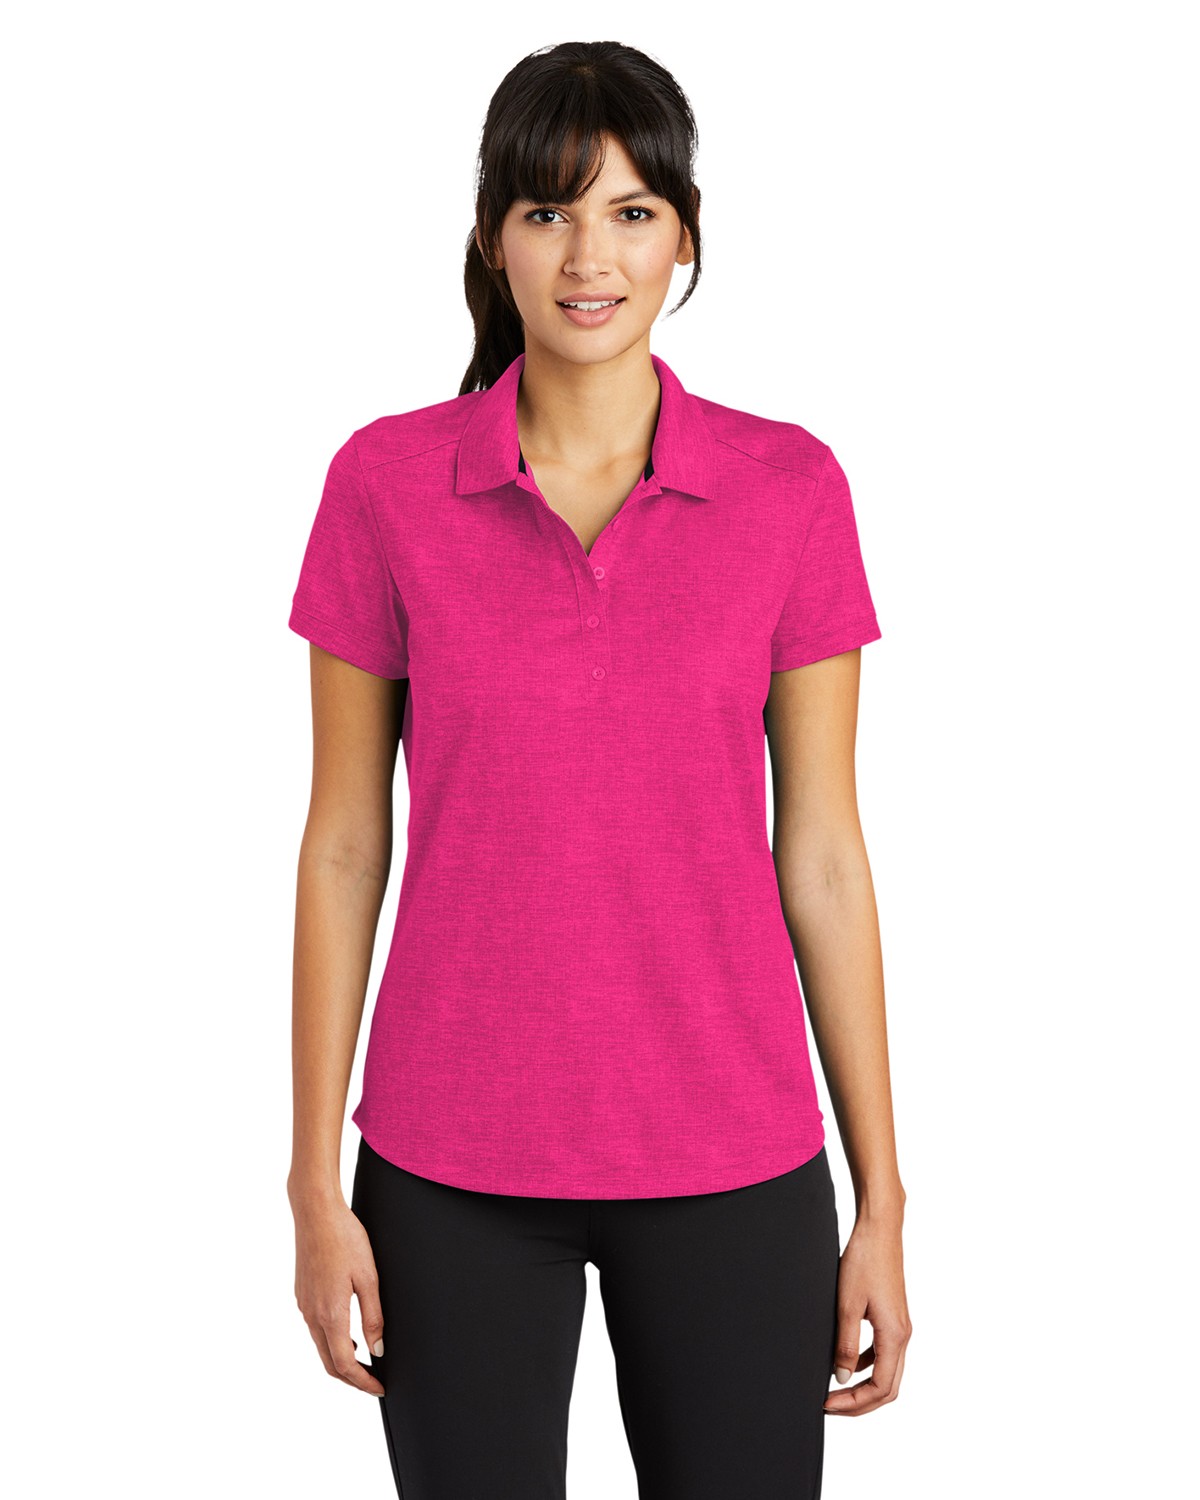 women's dri fit golf shirt